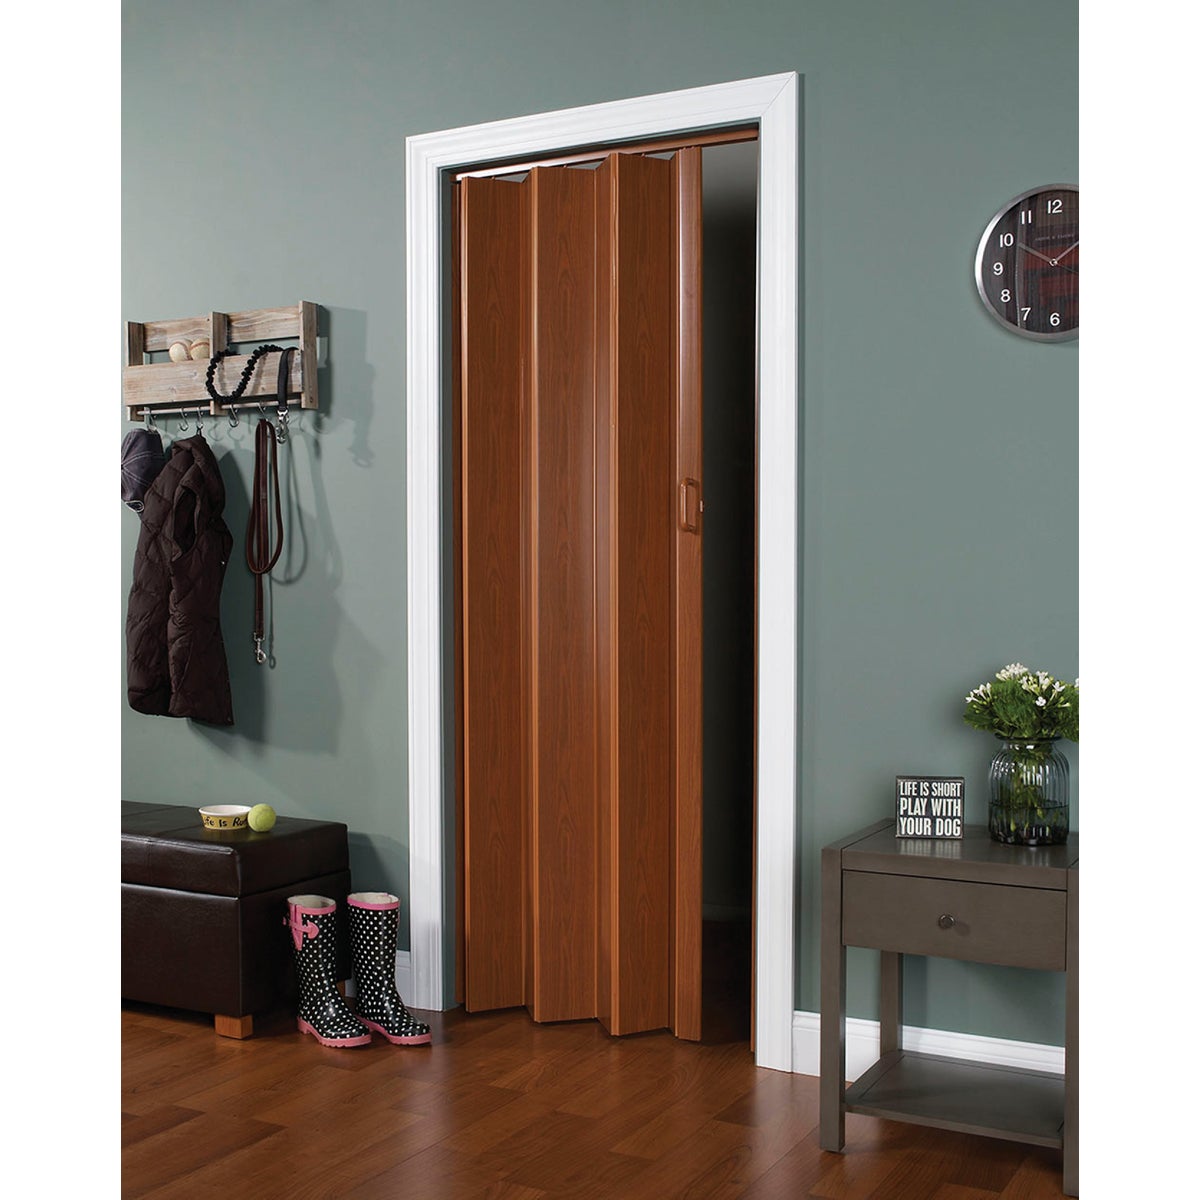 Item 167266, Energy-efficient double wall PVC (polyvinyl chloride) door with flexible 